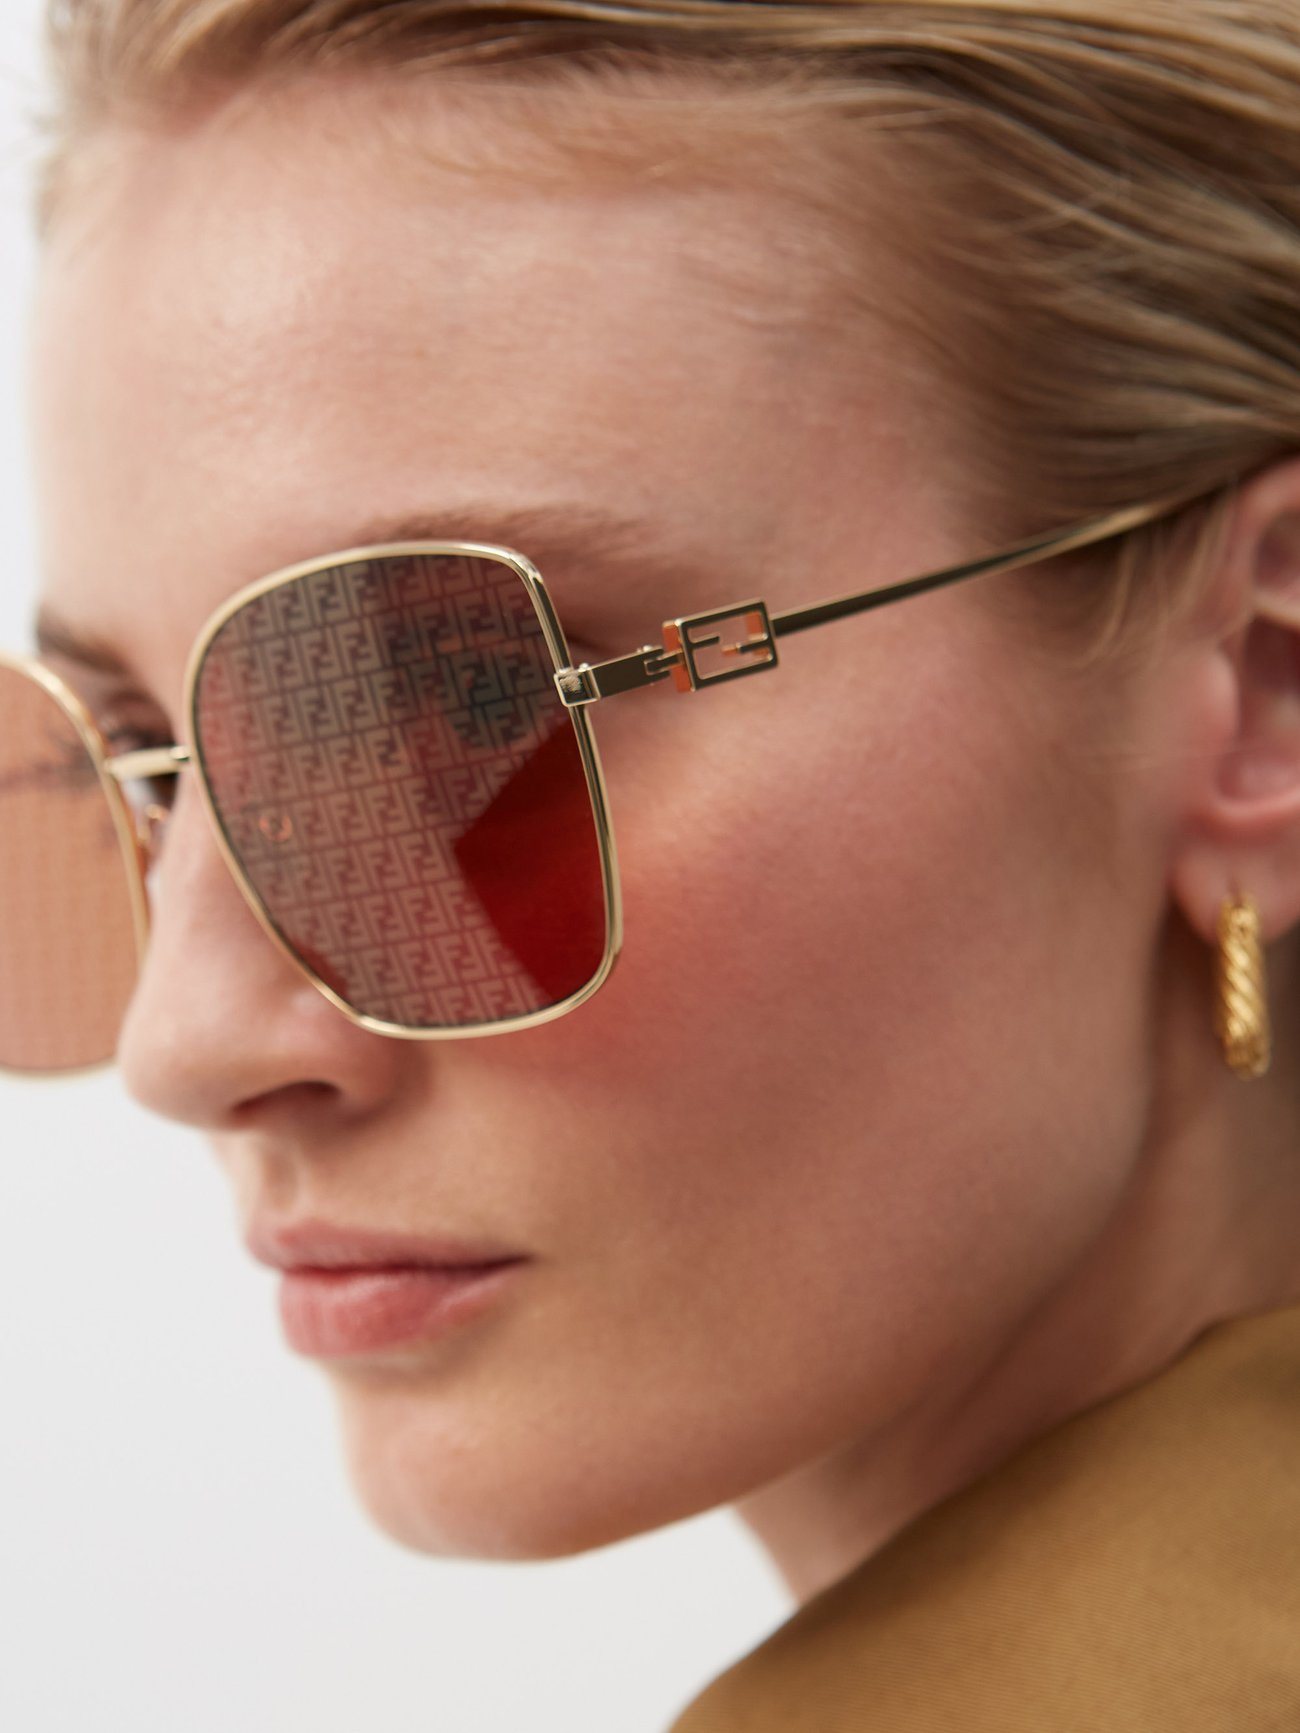 Baguette oversized square-frame gold-tone sunglasses